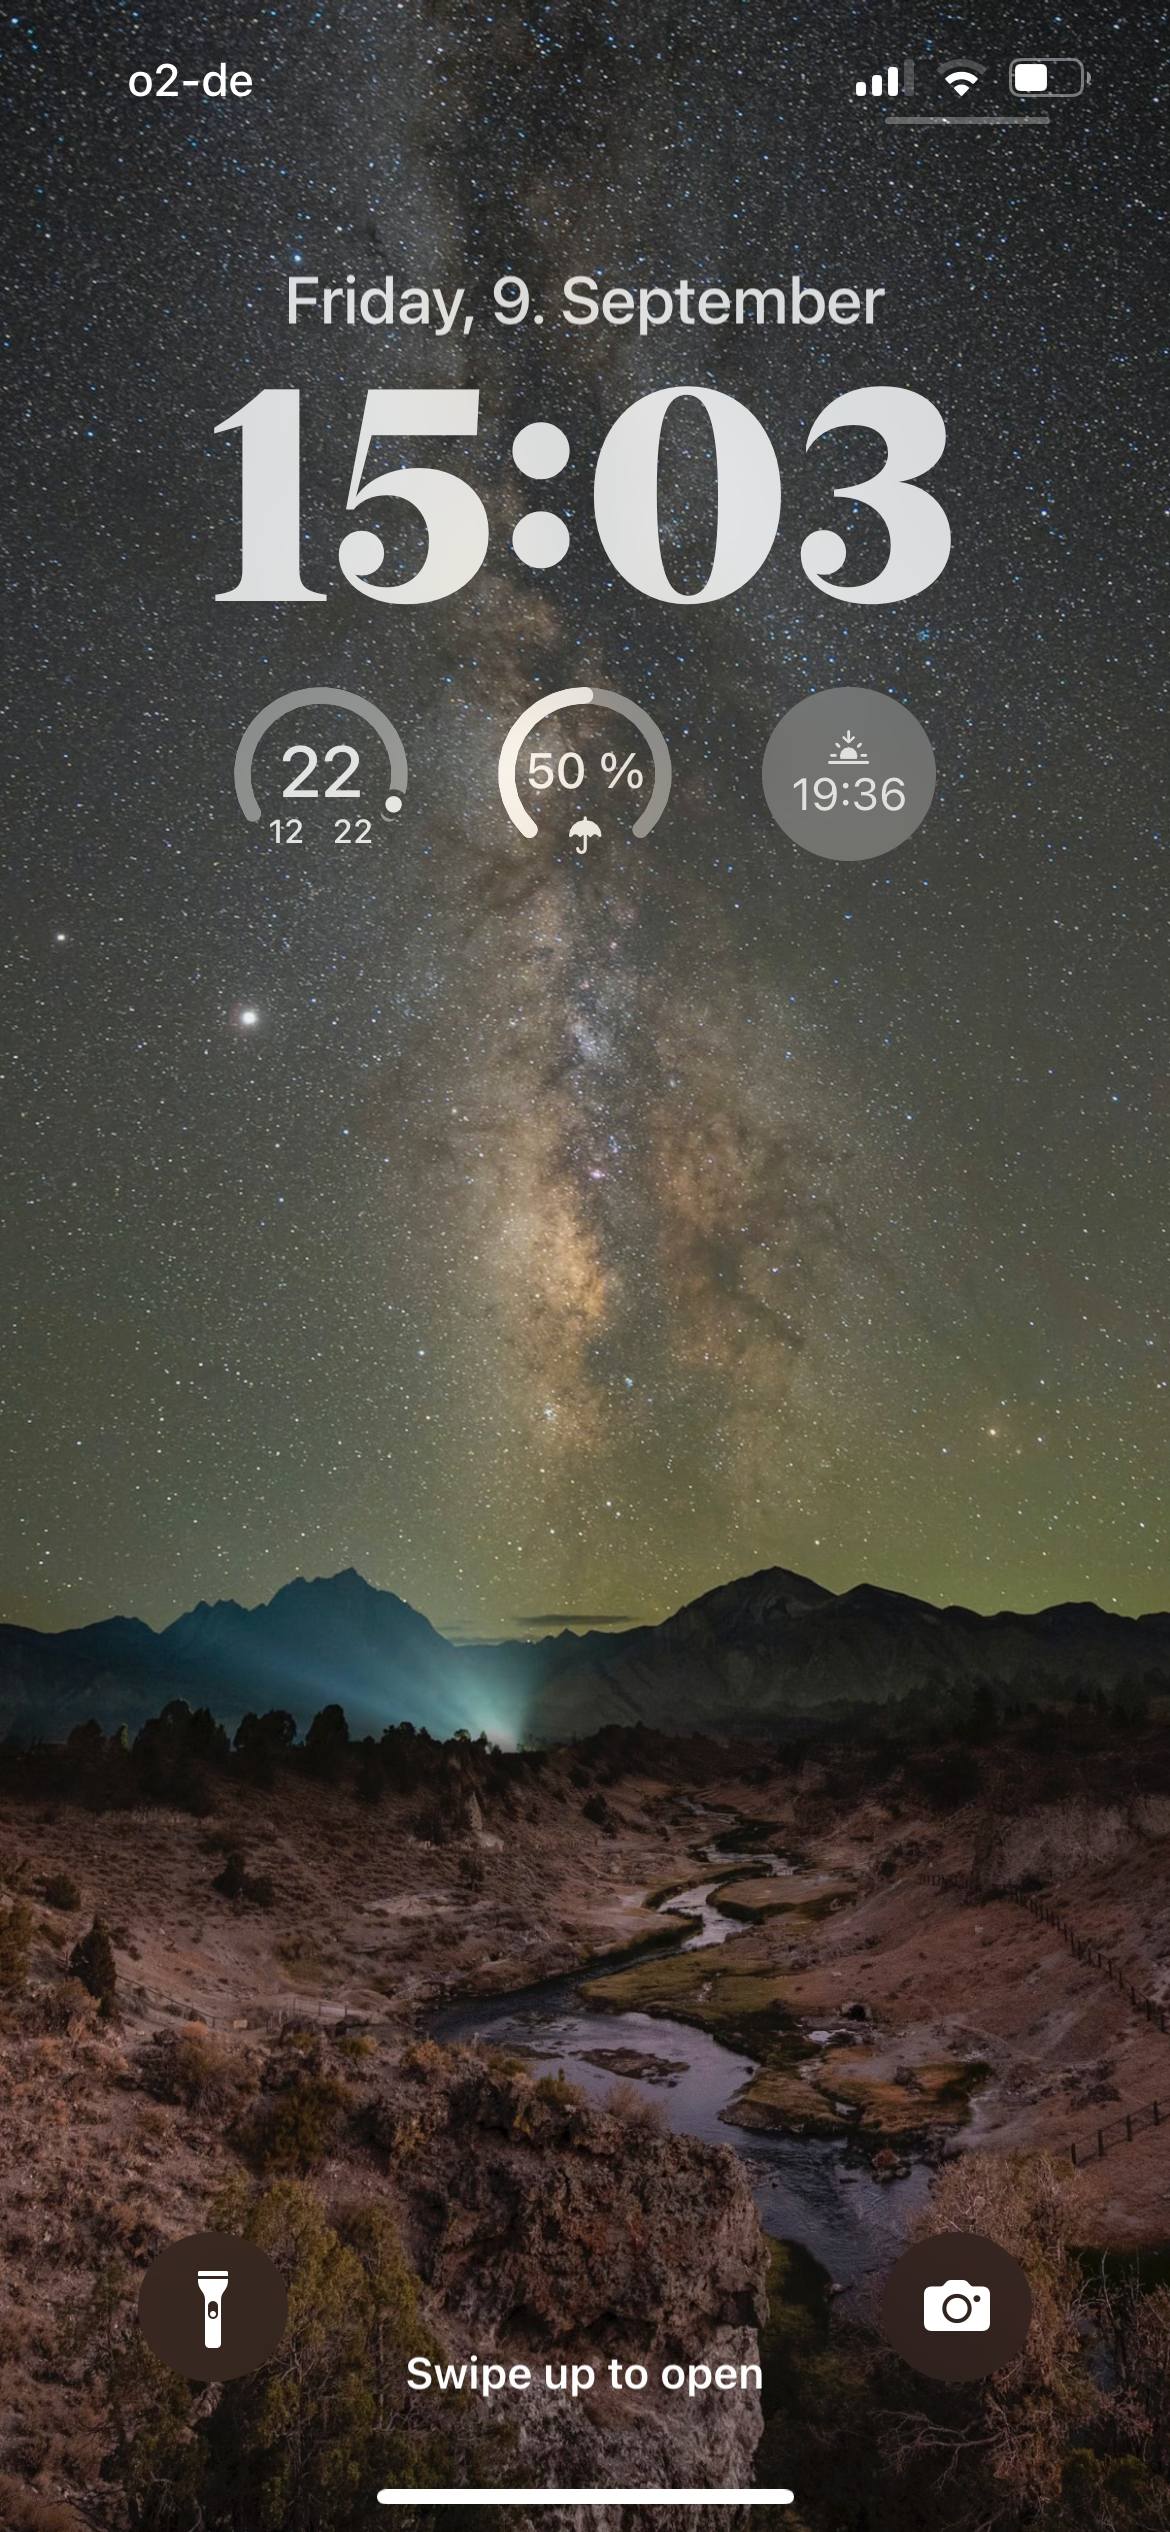 The iOS 16 lock screen showing widgets